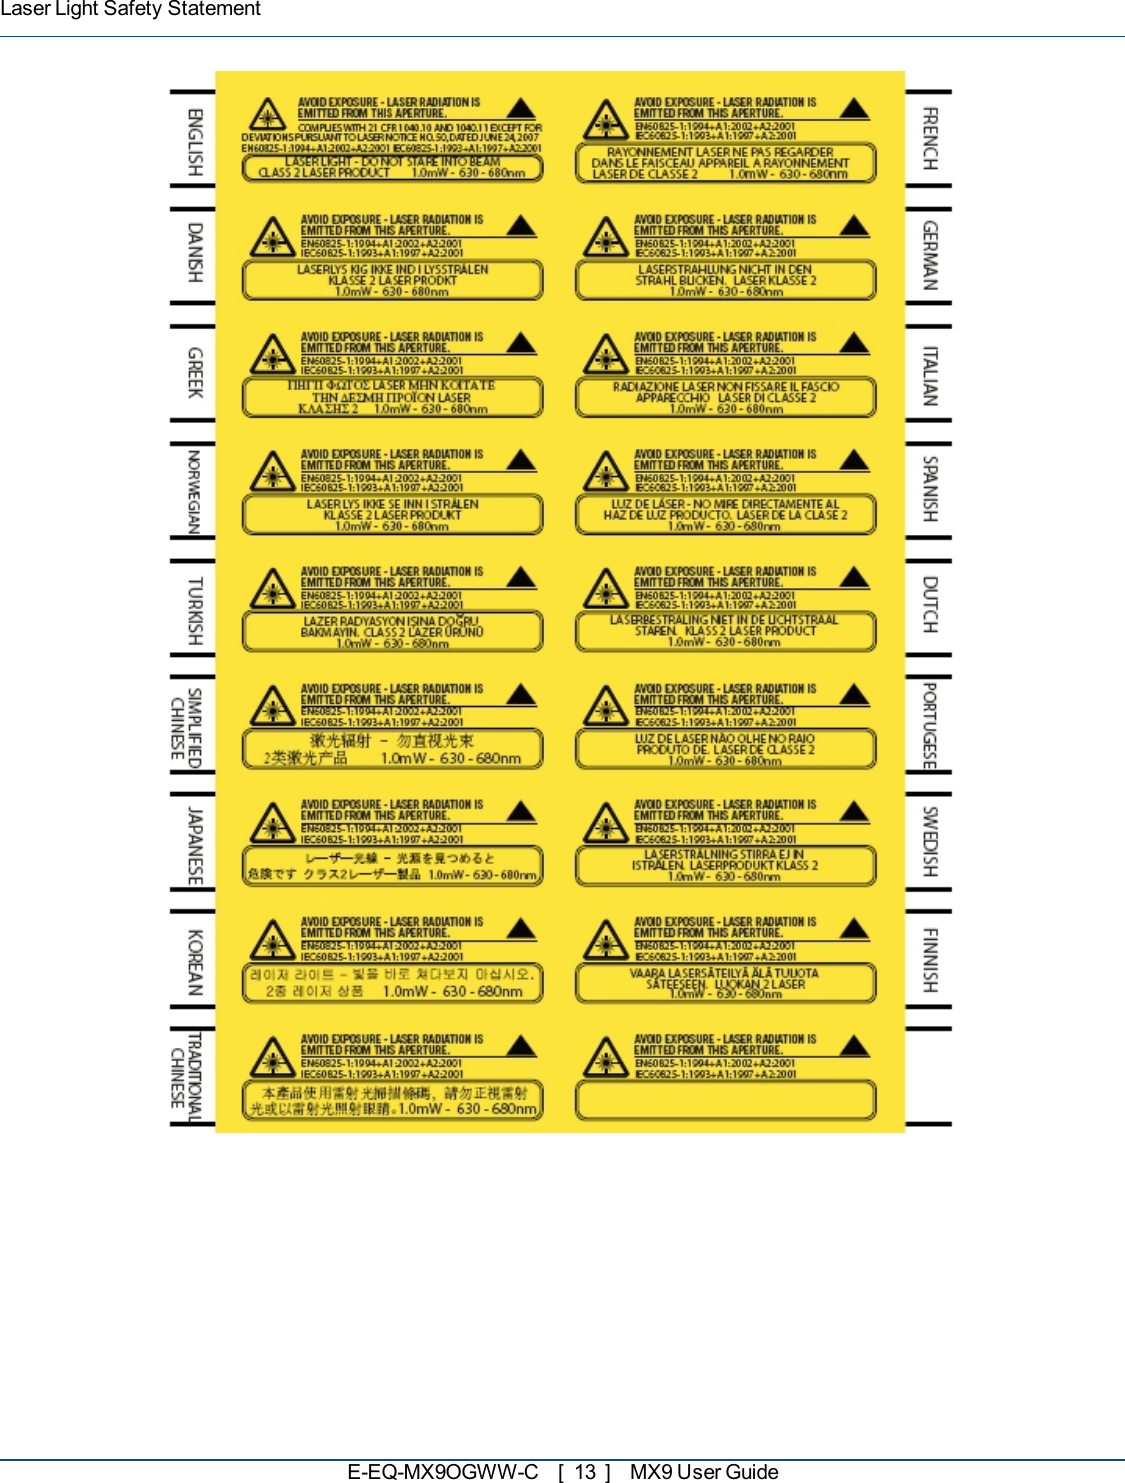 Laser Light Safety StatementE-EQ-MX9OGWW-C [ 13 ] MX9 User Guide